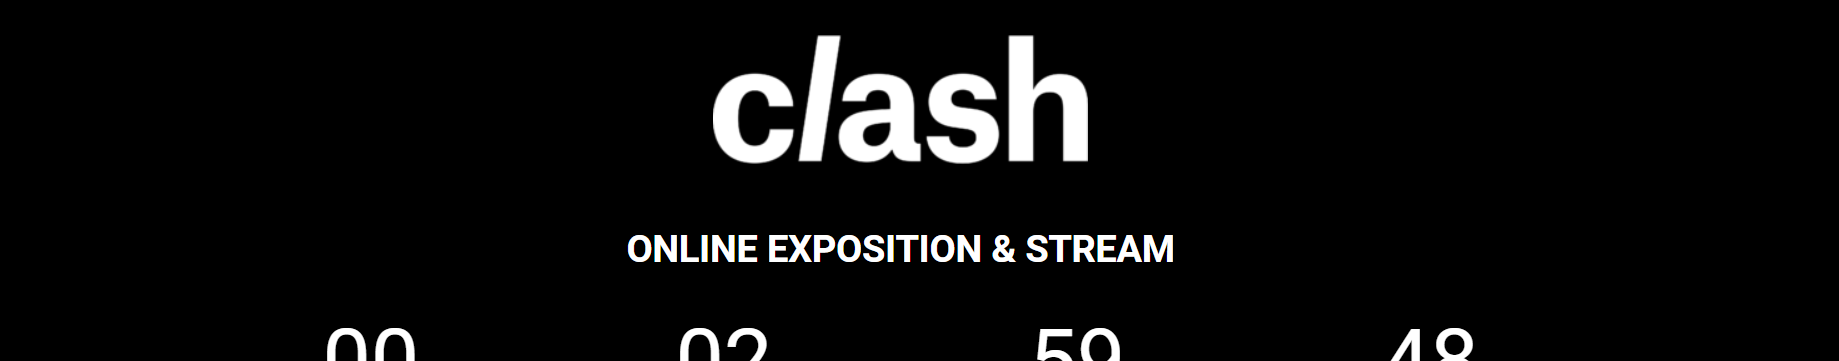 CLASH Online Exposition & Stream